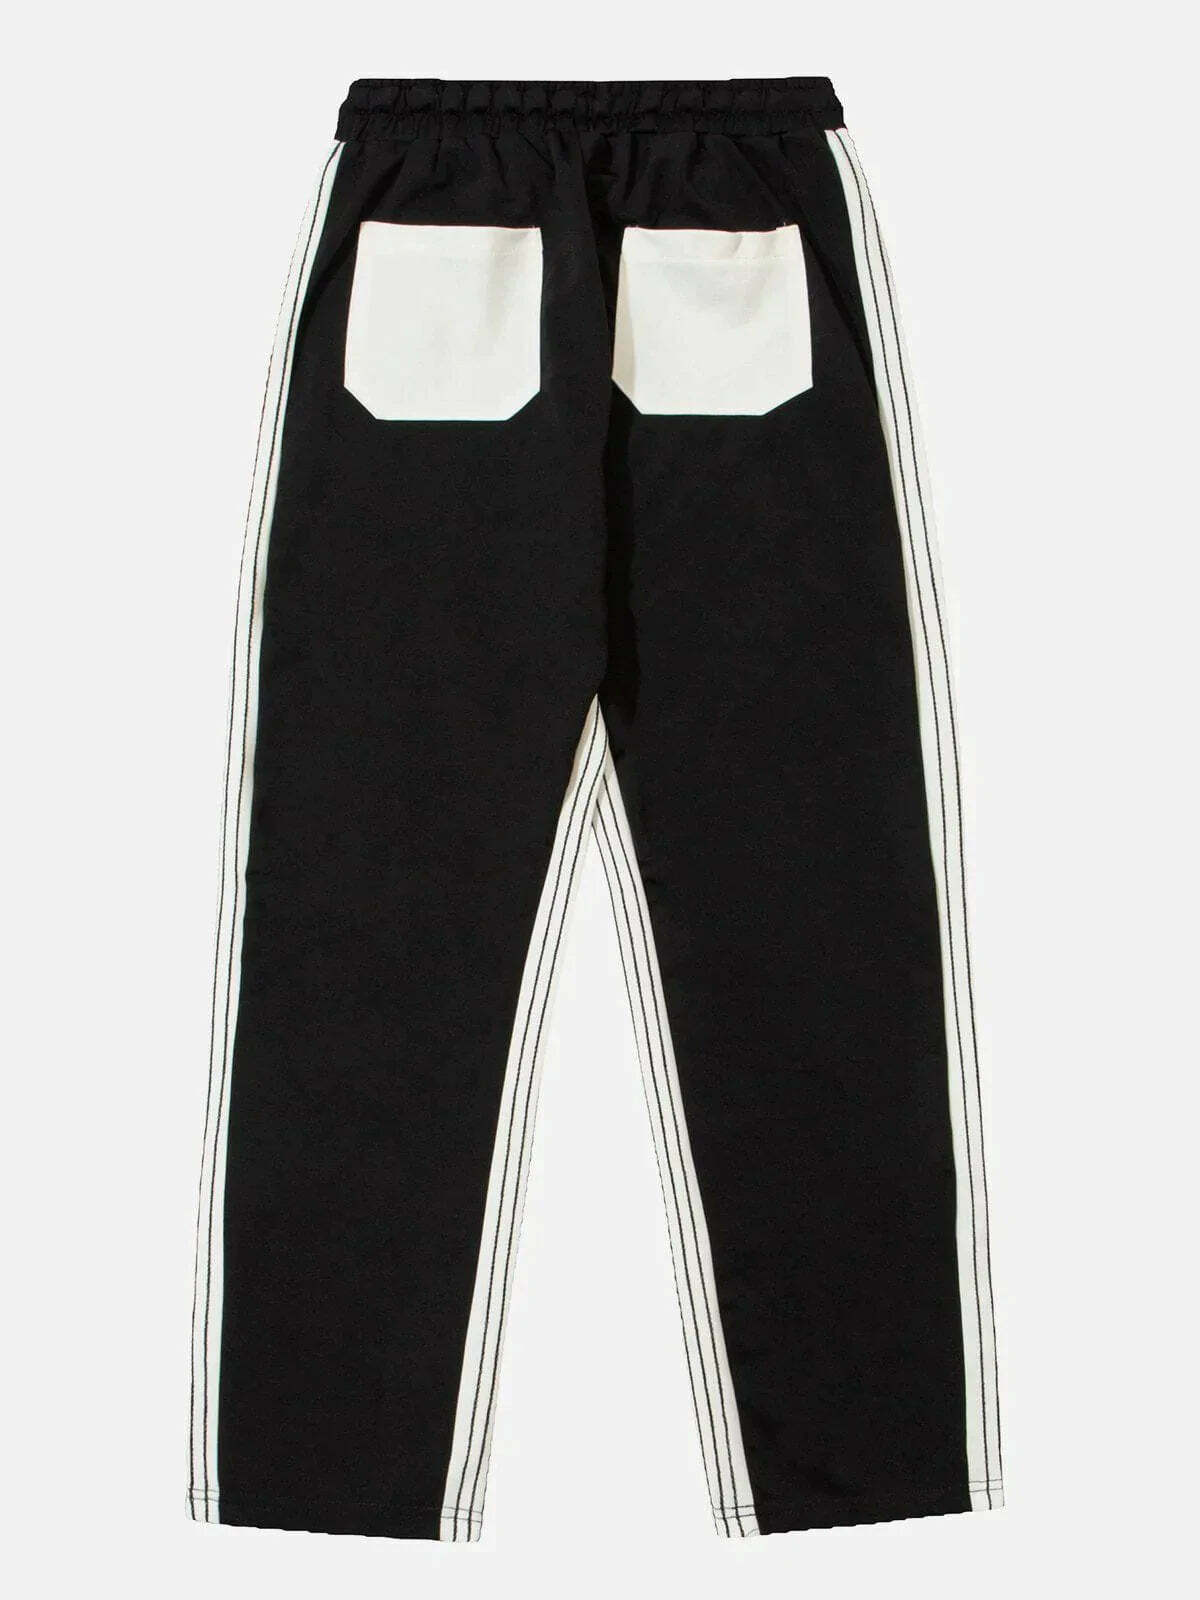 colorblock drawstring pants edgy streetwear essential 5549